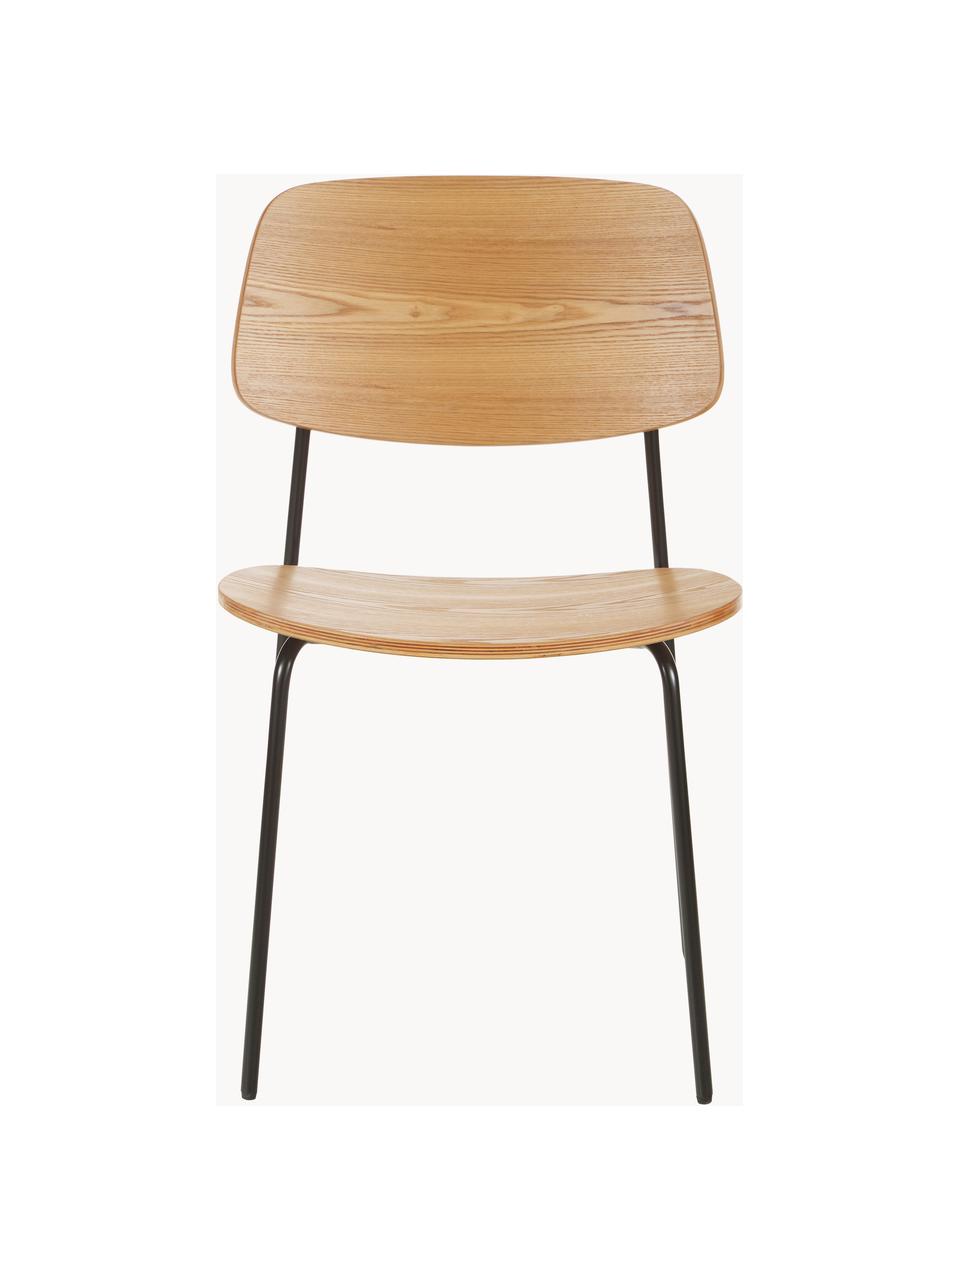 Holzstühle Nadja, 2 Stück, Sitzfläche: Sperrholz mit Eschenholzf, Beine: Metall, pulverbeschichtet, Helles Holz, B 50 x T 53 cm